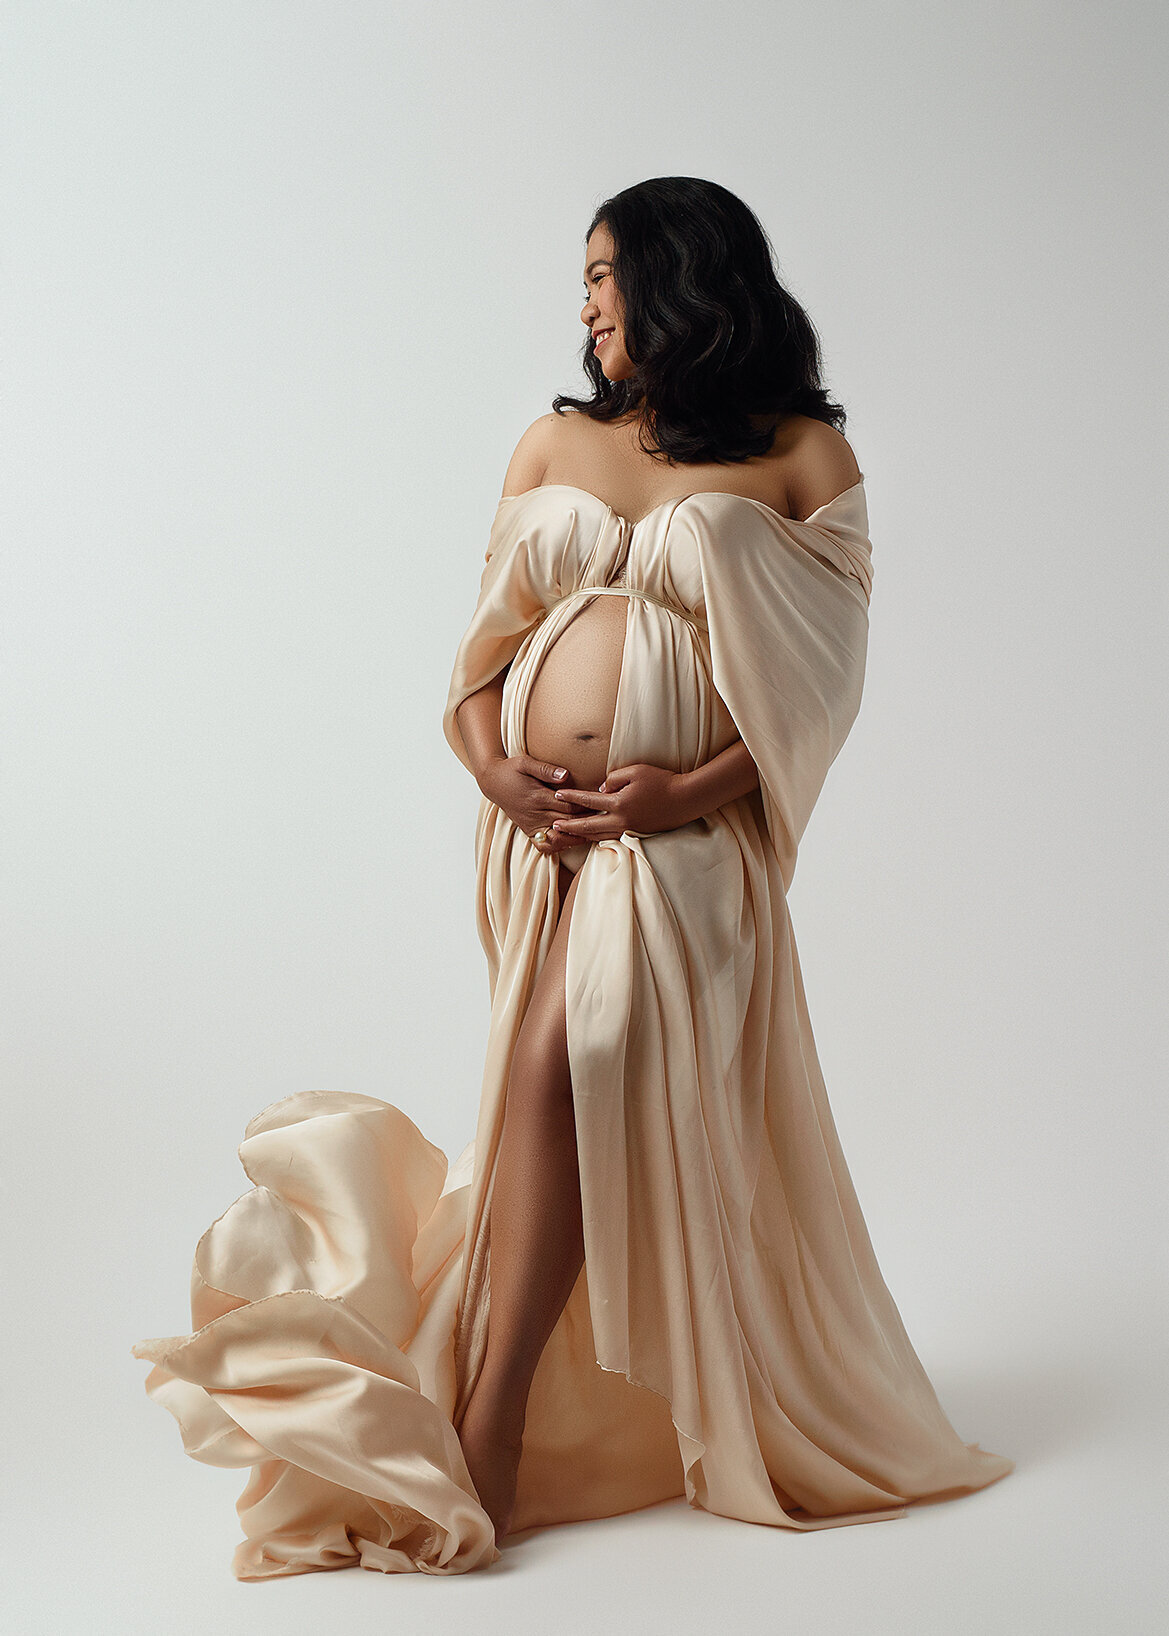 tan silk fabric flowing on beautiful maternity photoshoot mama in studio